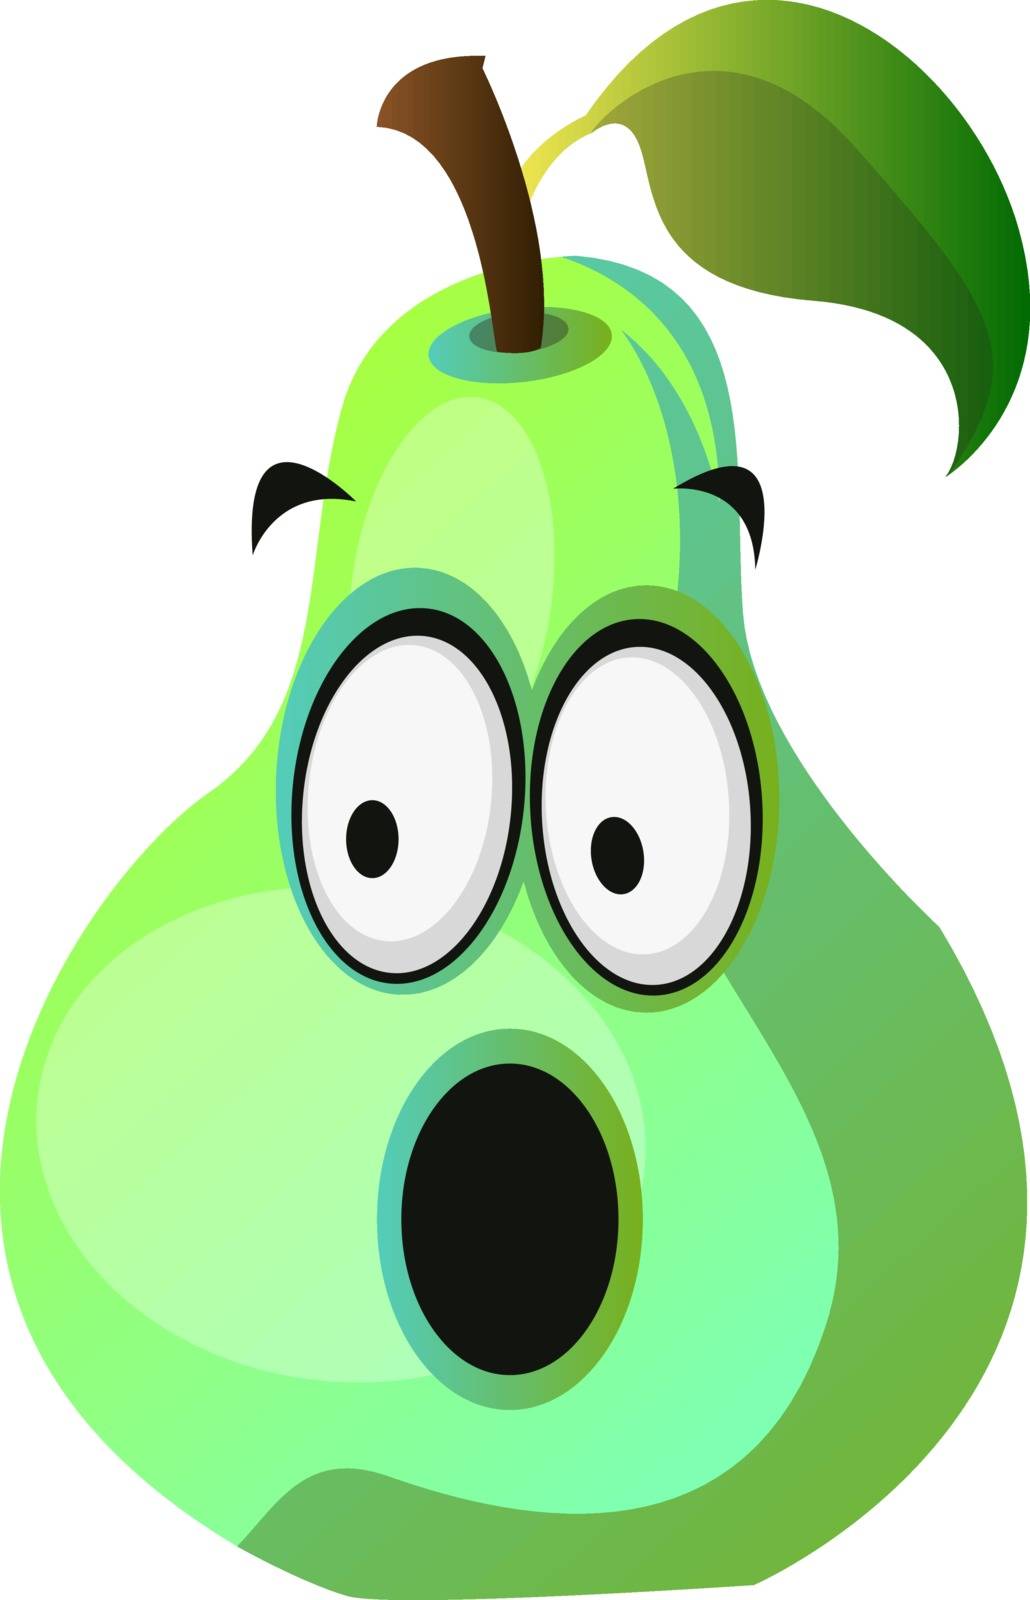 Amazed pear cartoon face illustration vector on white background